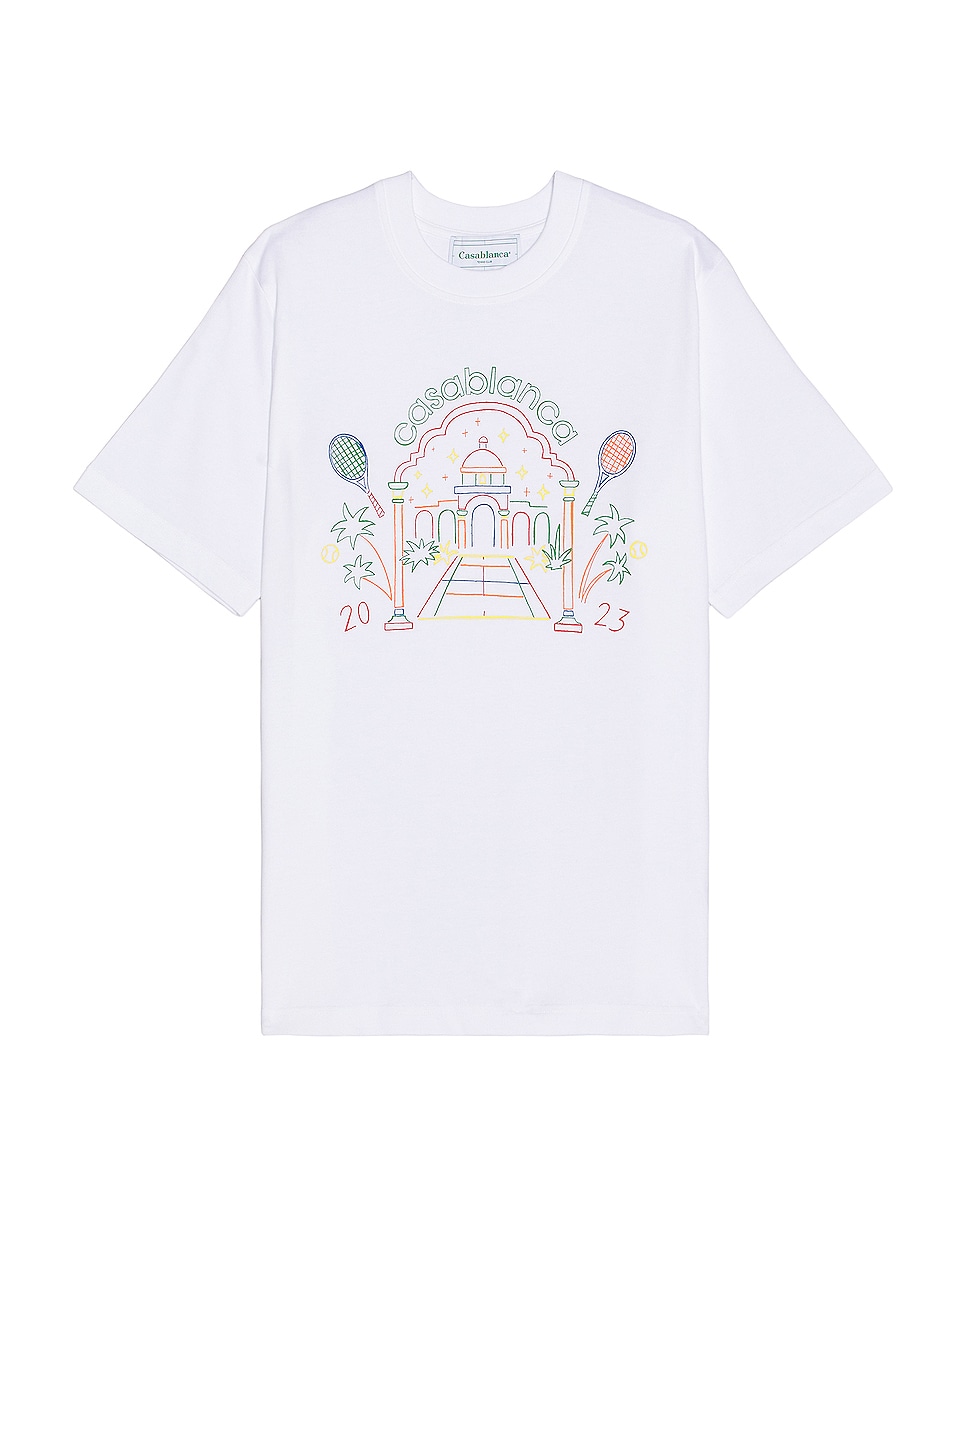 Casablanca Rainbow Crayon Temple T-shirt in White